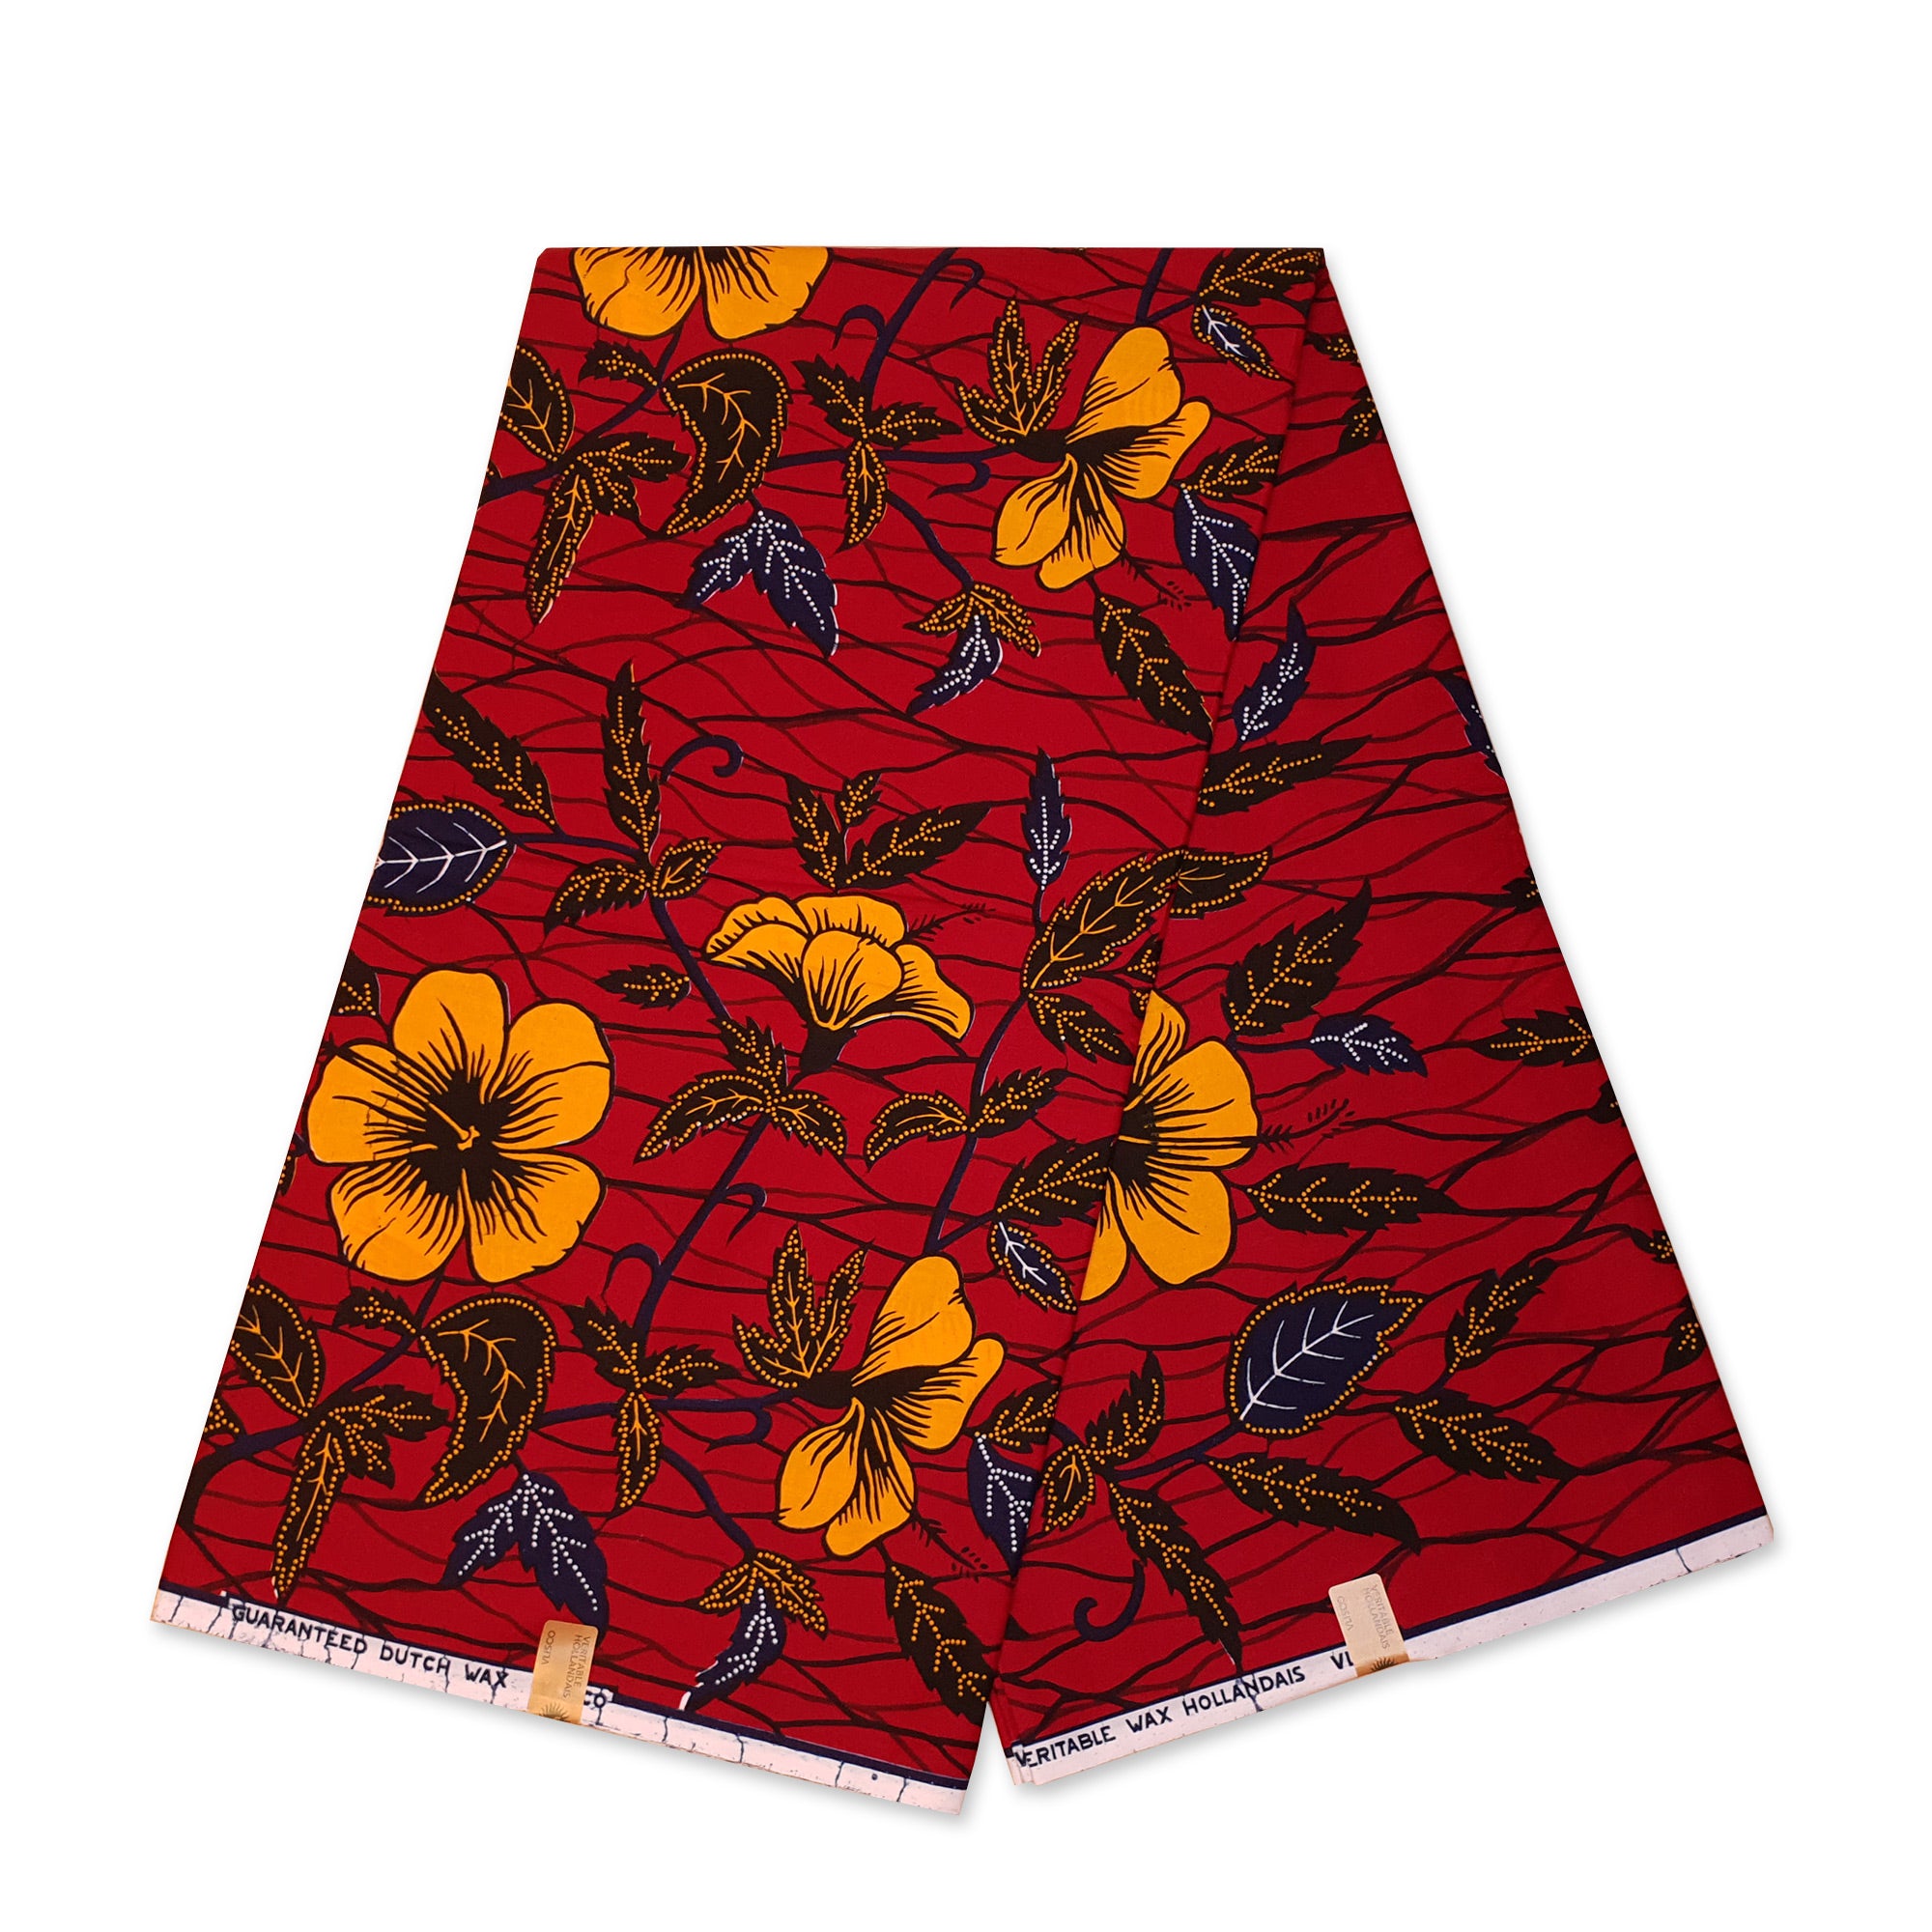 VLISCO Hollandais Wax print fabric - Dark red / Yellow hibiscus flowers